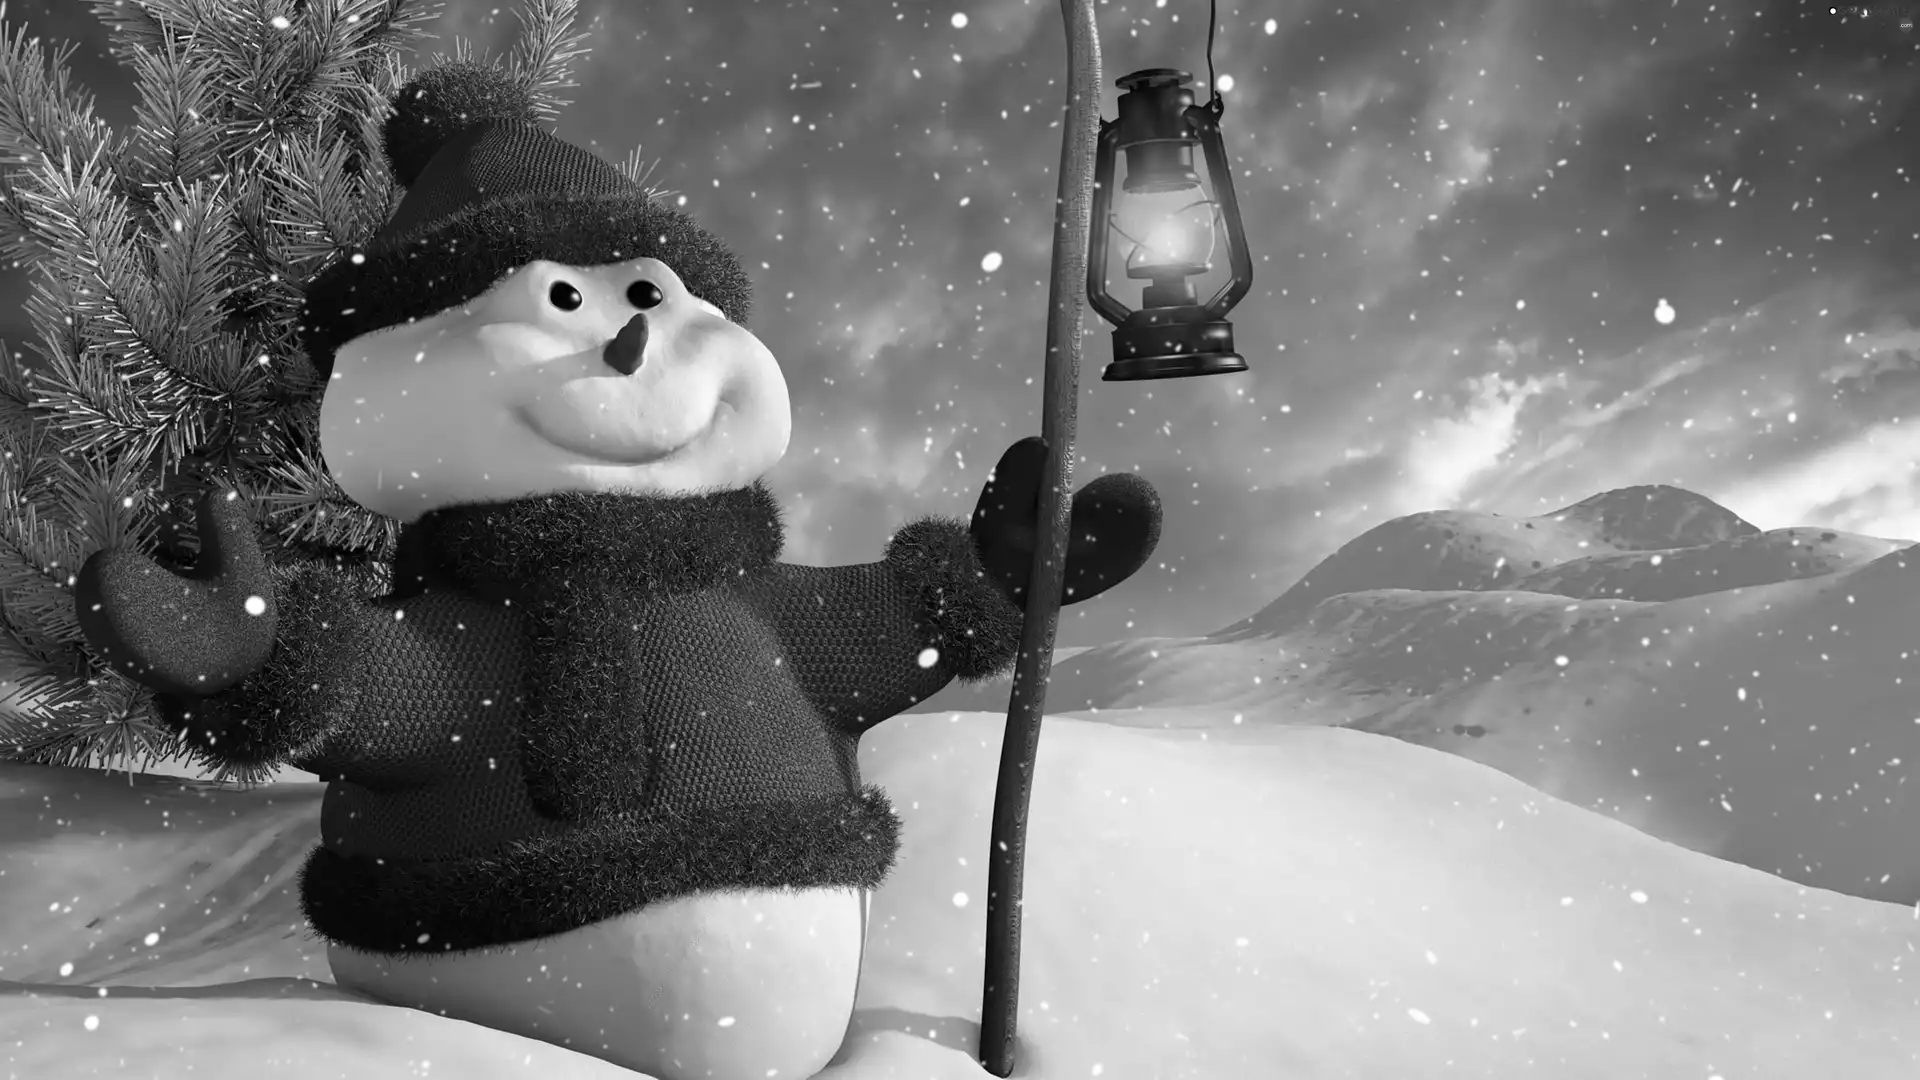 Lamp, snow, clothes, lantern, Snowman